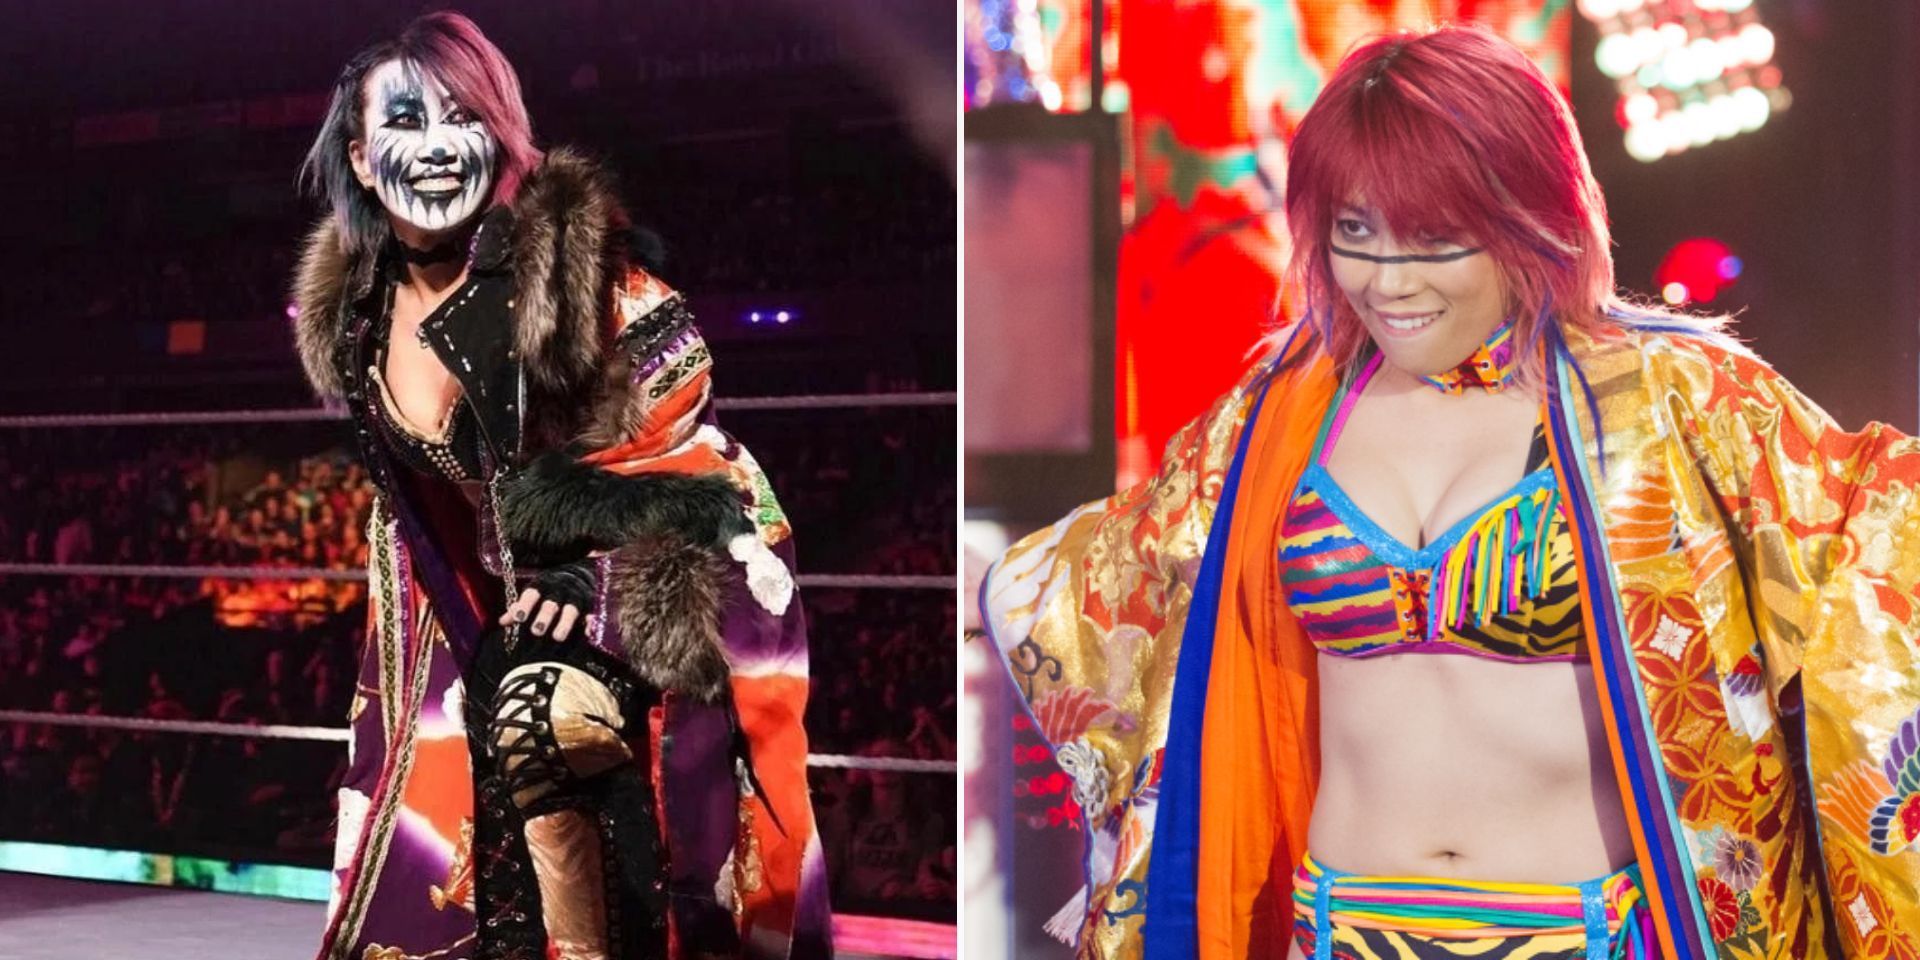 Asuka will return to WWE on NXT next week